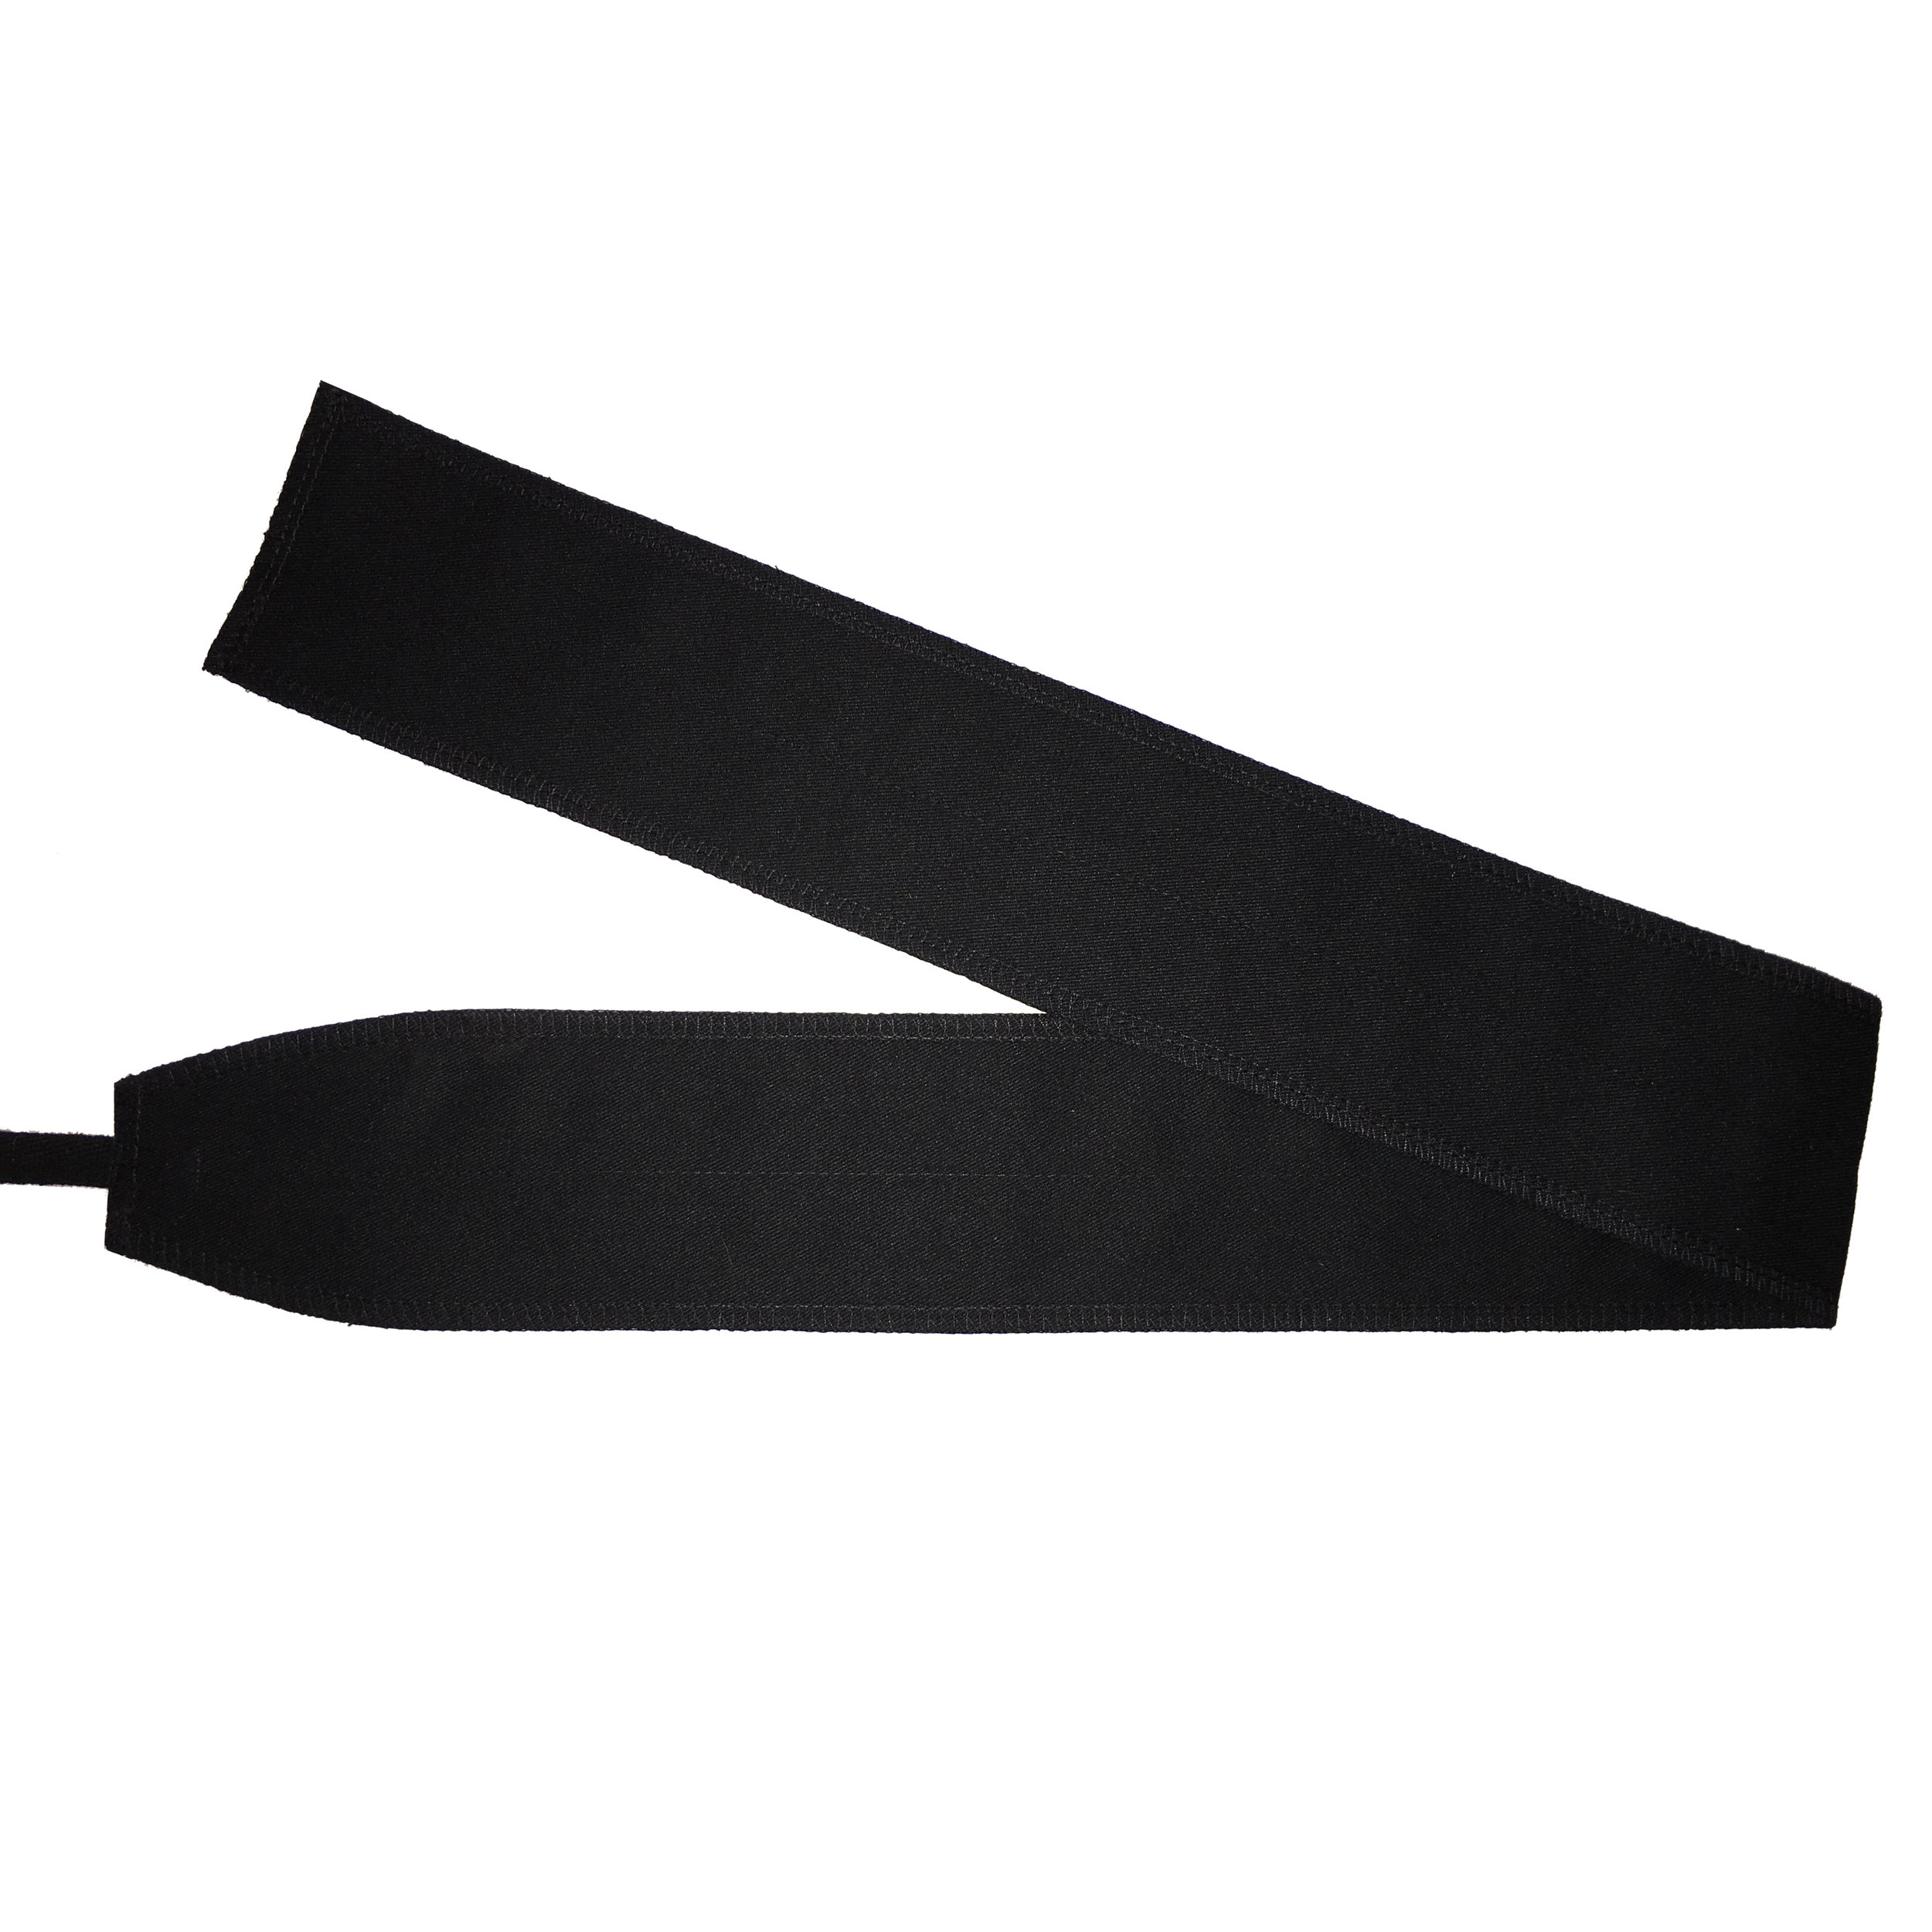 Custom Wrist Wraps — Black Wraps and Black Stitching